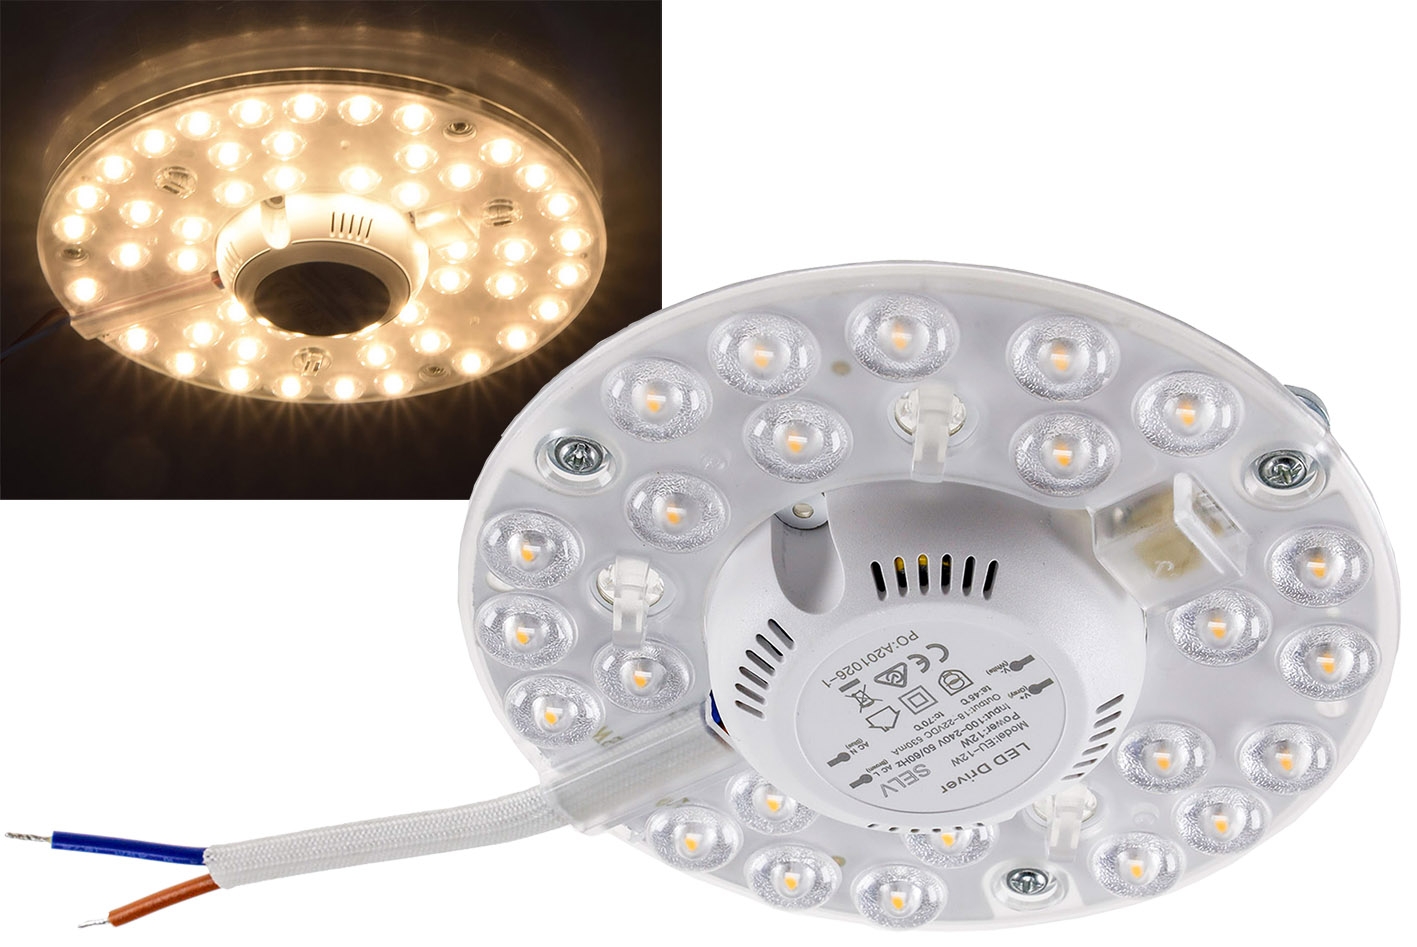 LED Umrüstmodul "UM12ww" für Leuchten, Ø125mm, 12W, 1080lm, 3000K, Magnethalter